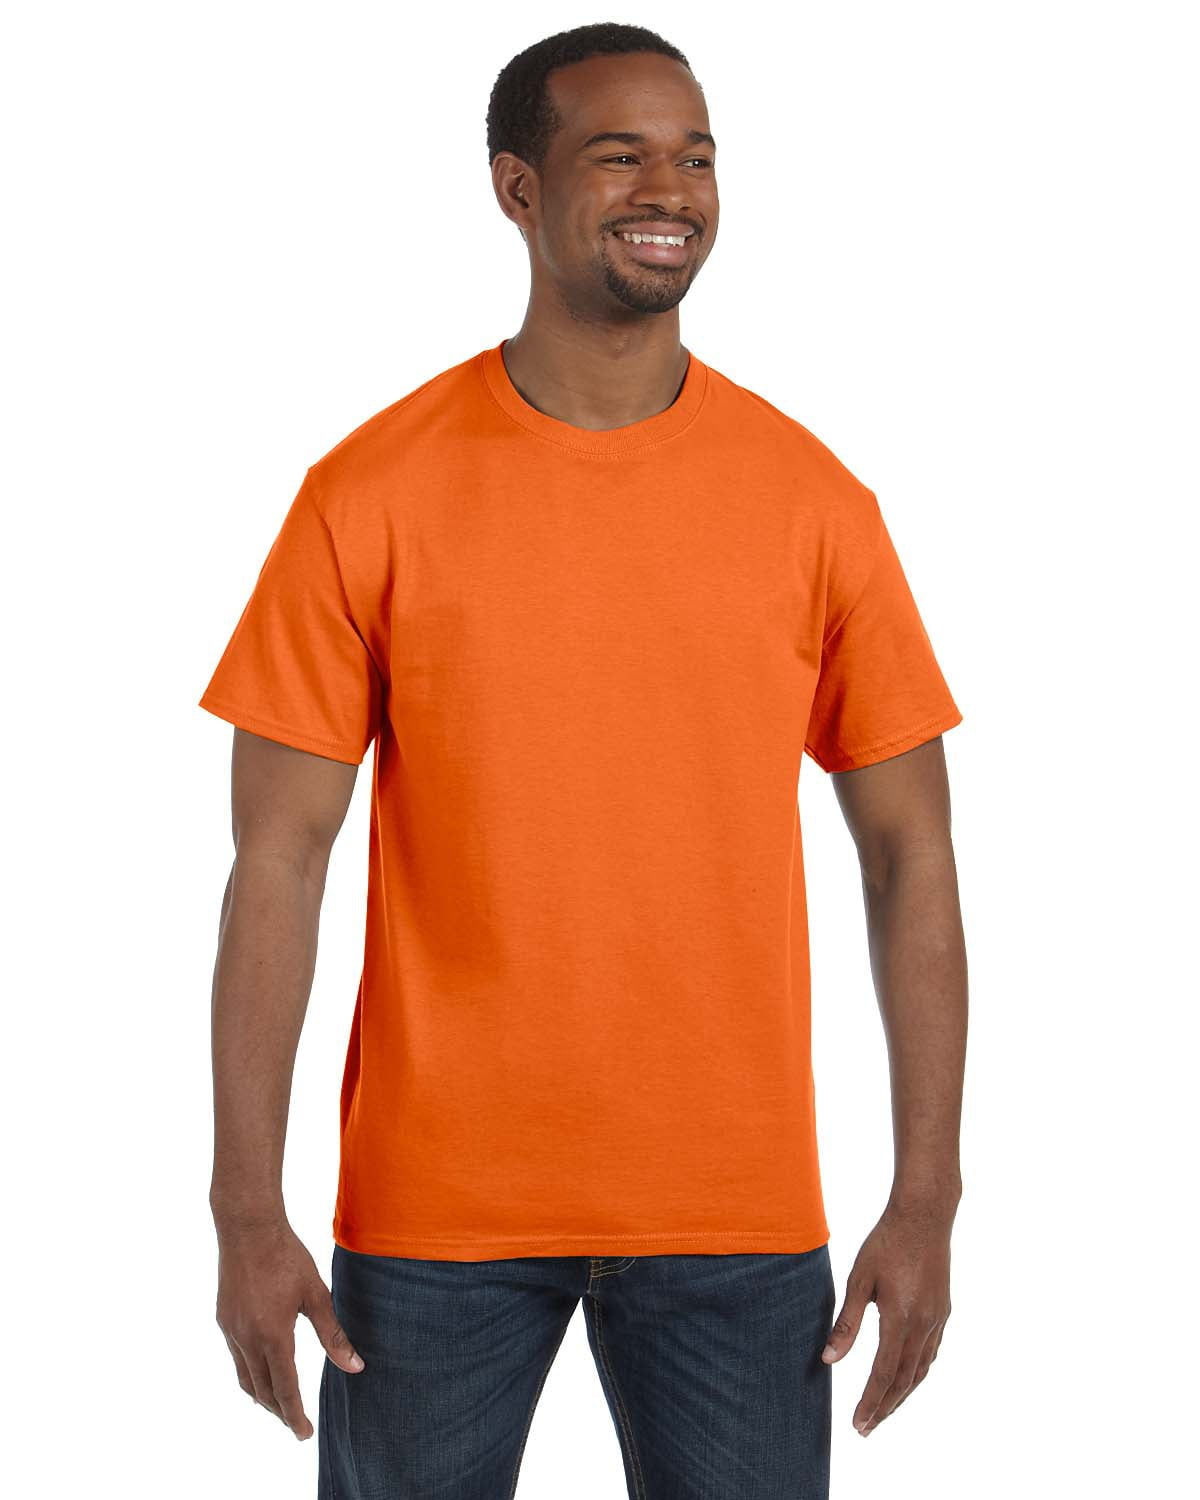 Orange Tagless T-Shirt Hanes 6.1 oz XL 5250T 